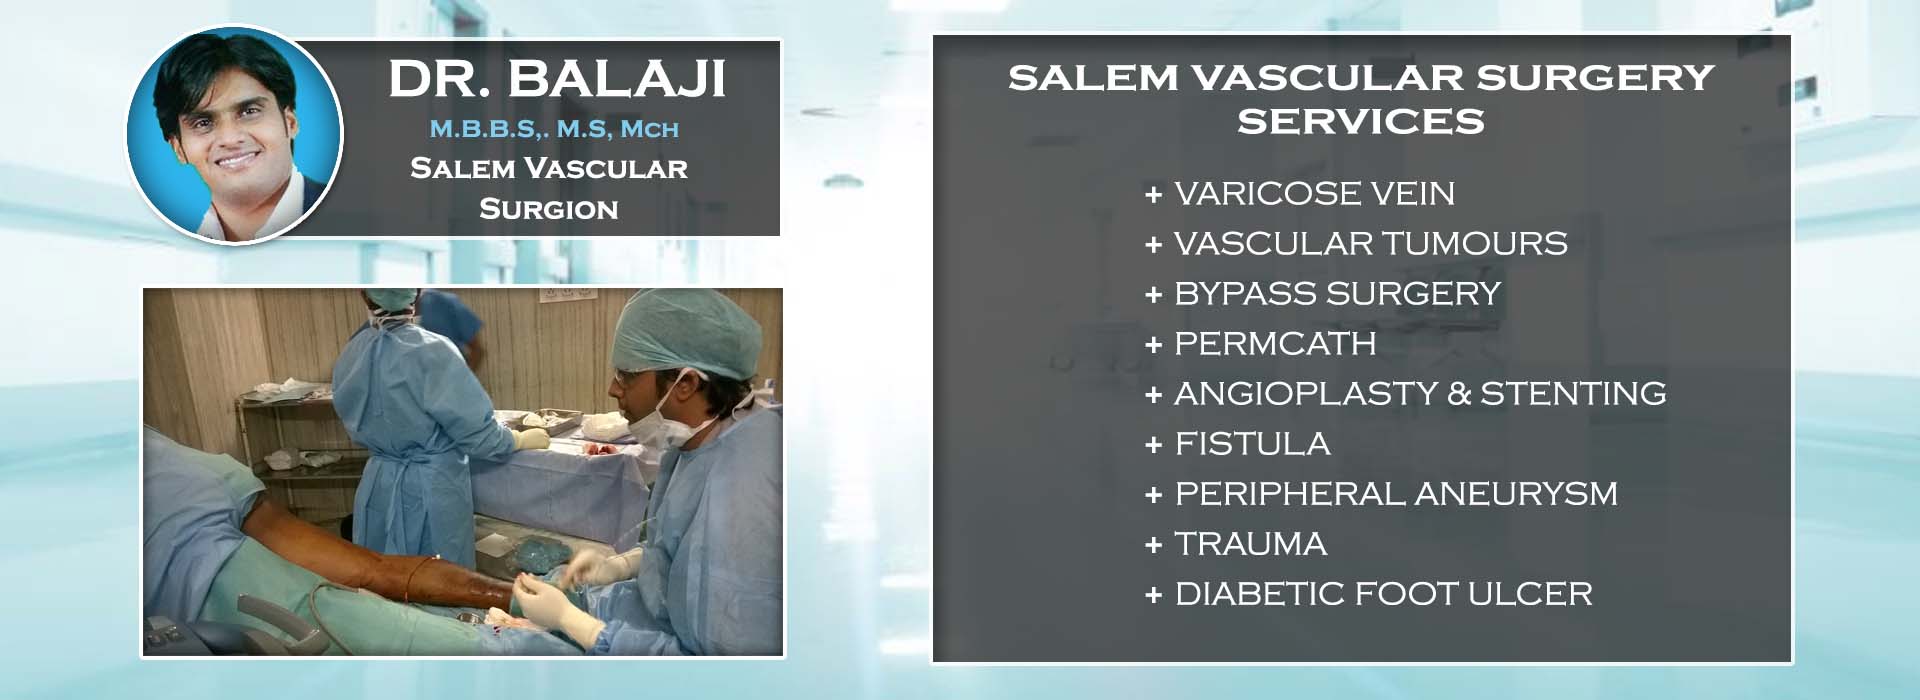 salem-vascular-sugeon-dr-balaji